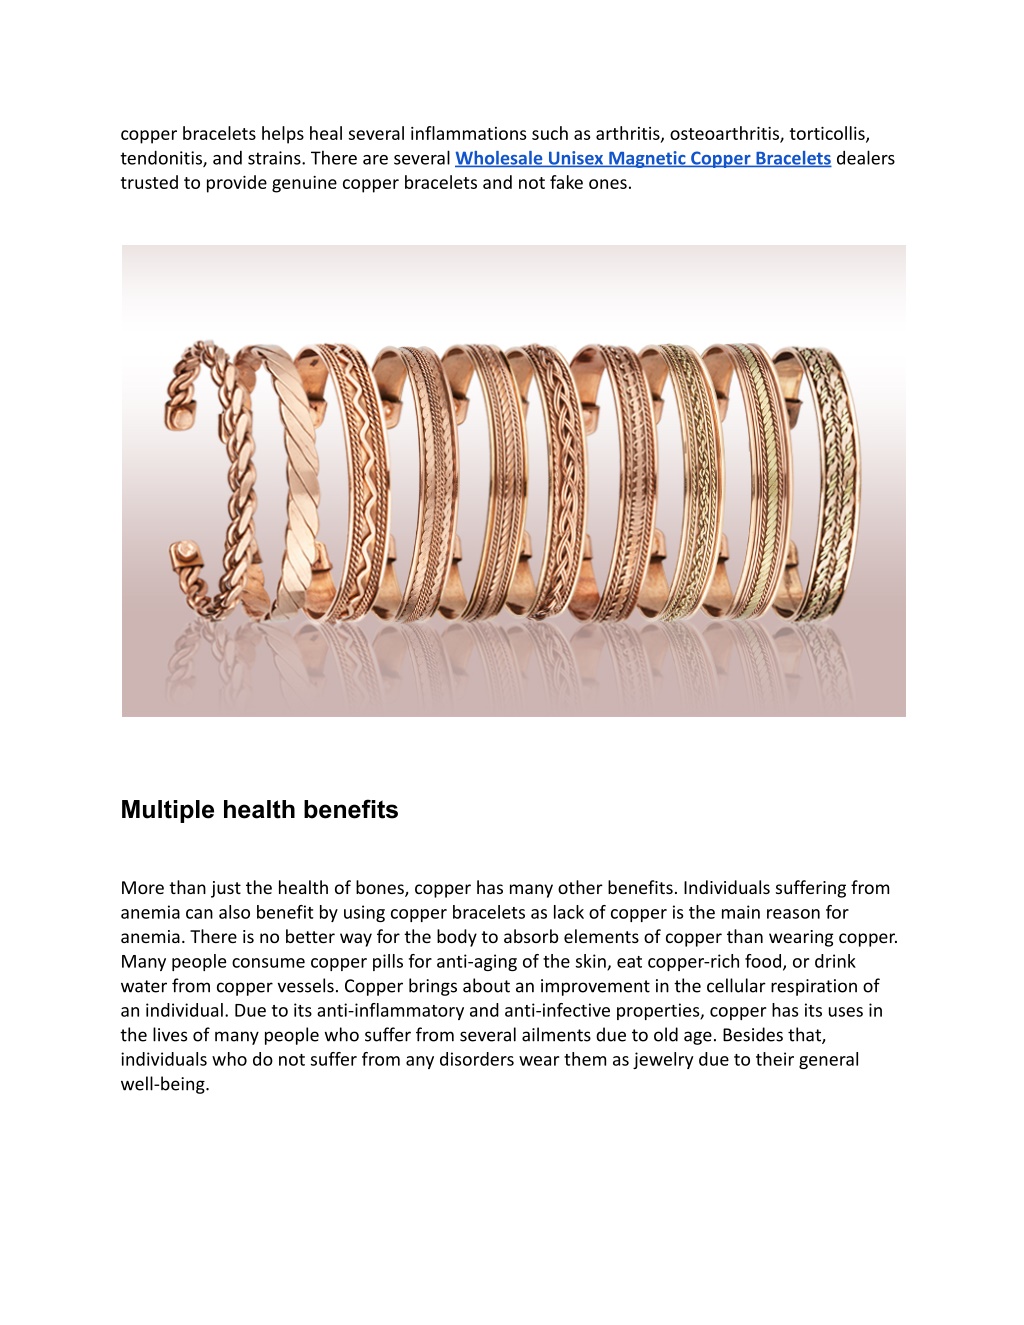 Benefits Of Copper Bracelets - YouTube